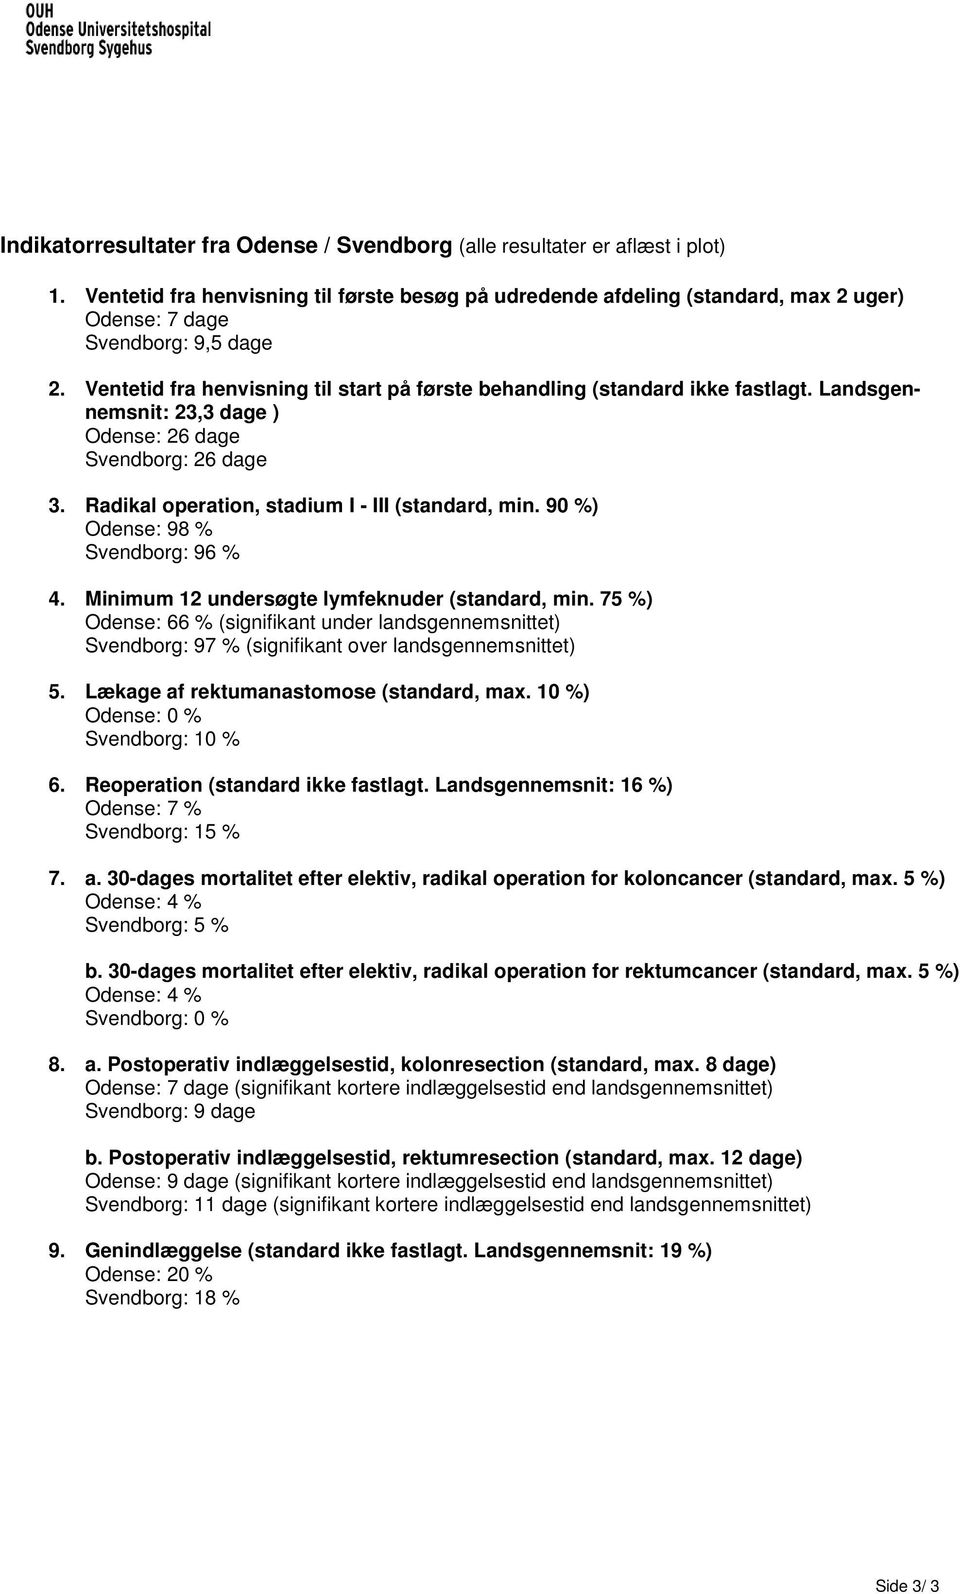 Ventetid fra henvisning til start på første behandling (standard ikke fastlagt. Landsgennemsnit: 23,3 dage ) Odense: 26 dage Svendborg: 26 dage 3. Radikal operation, stadium I - III (standard, min.